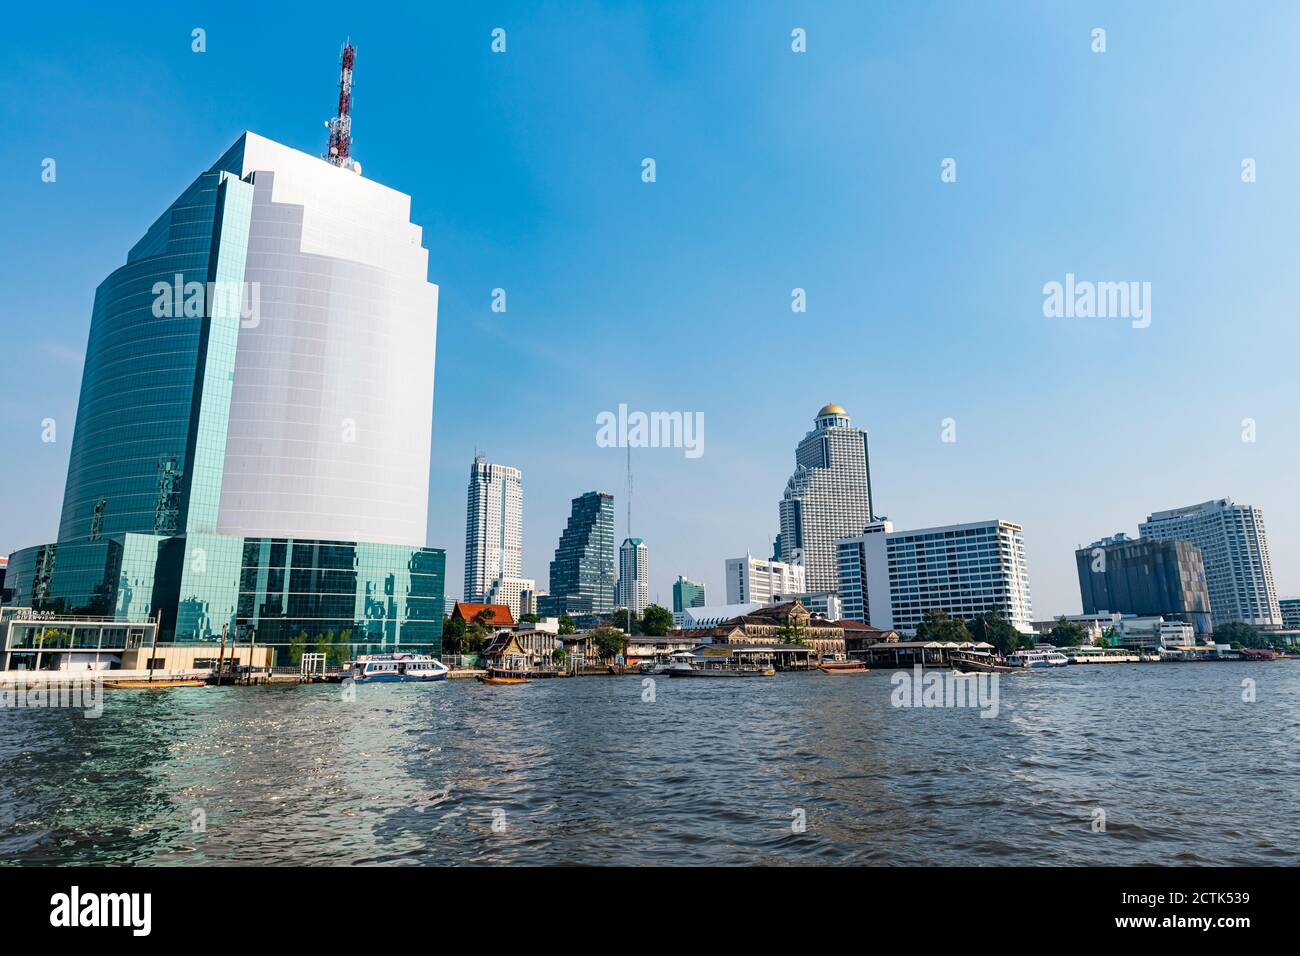 Thailand, Bangkok, Chao Phraya river and waterfront skyscrapers Stock Photo